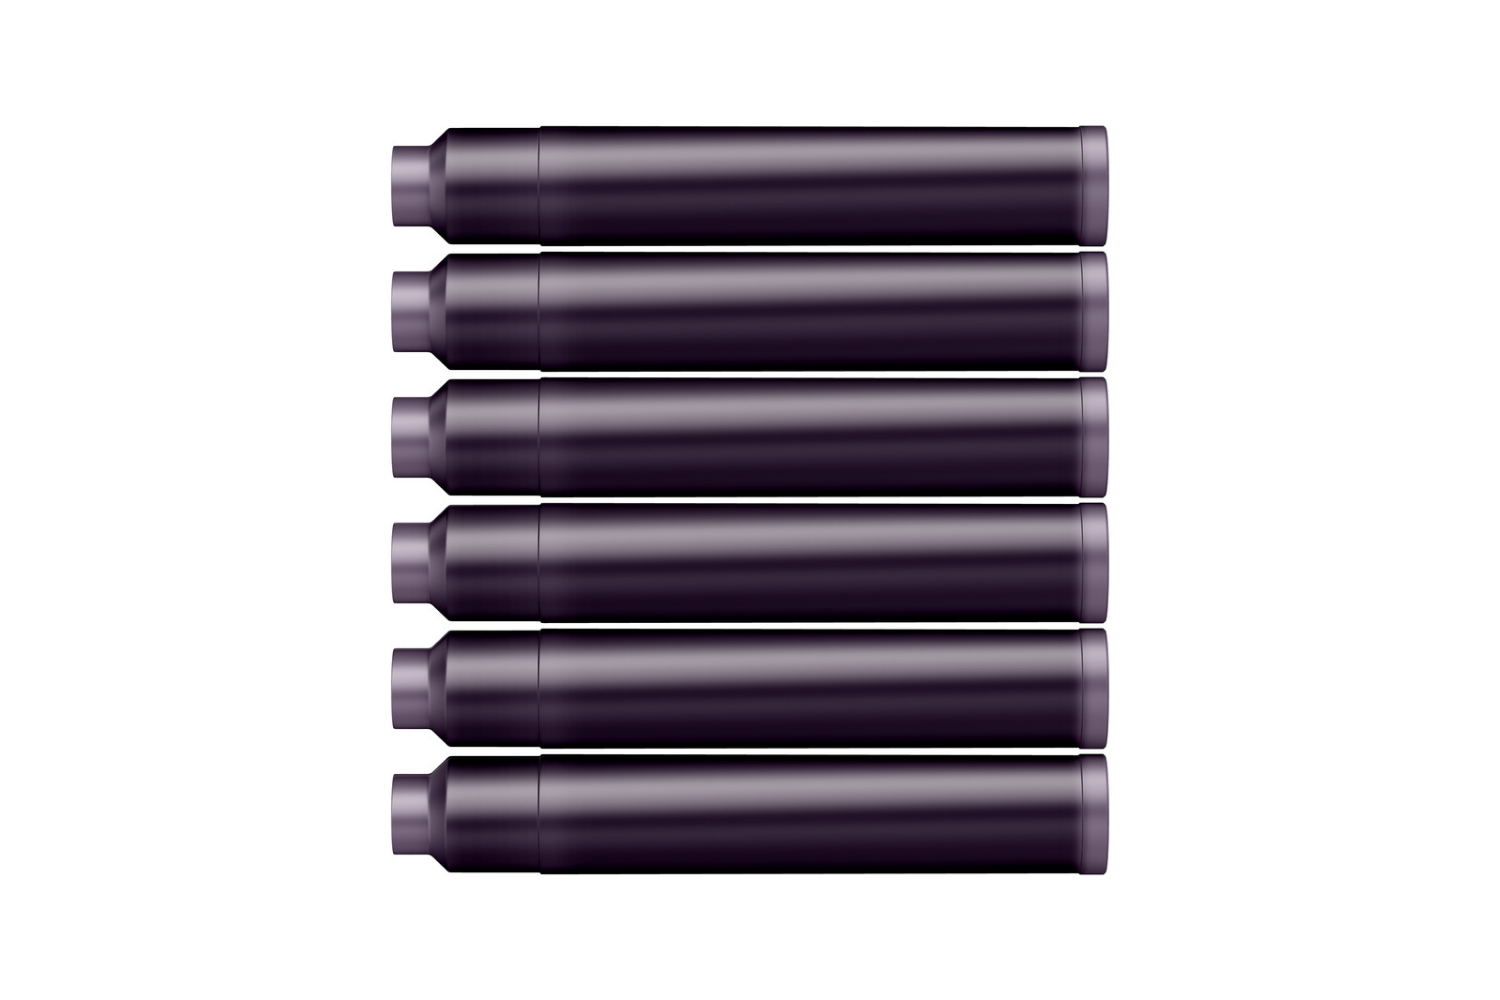 Diamine Bilberry - Ink Cartridges (6)